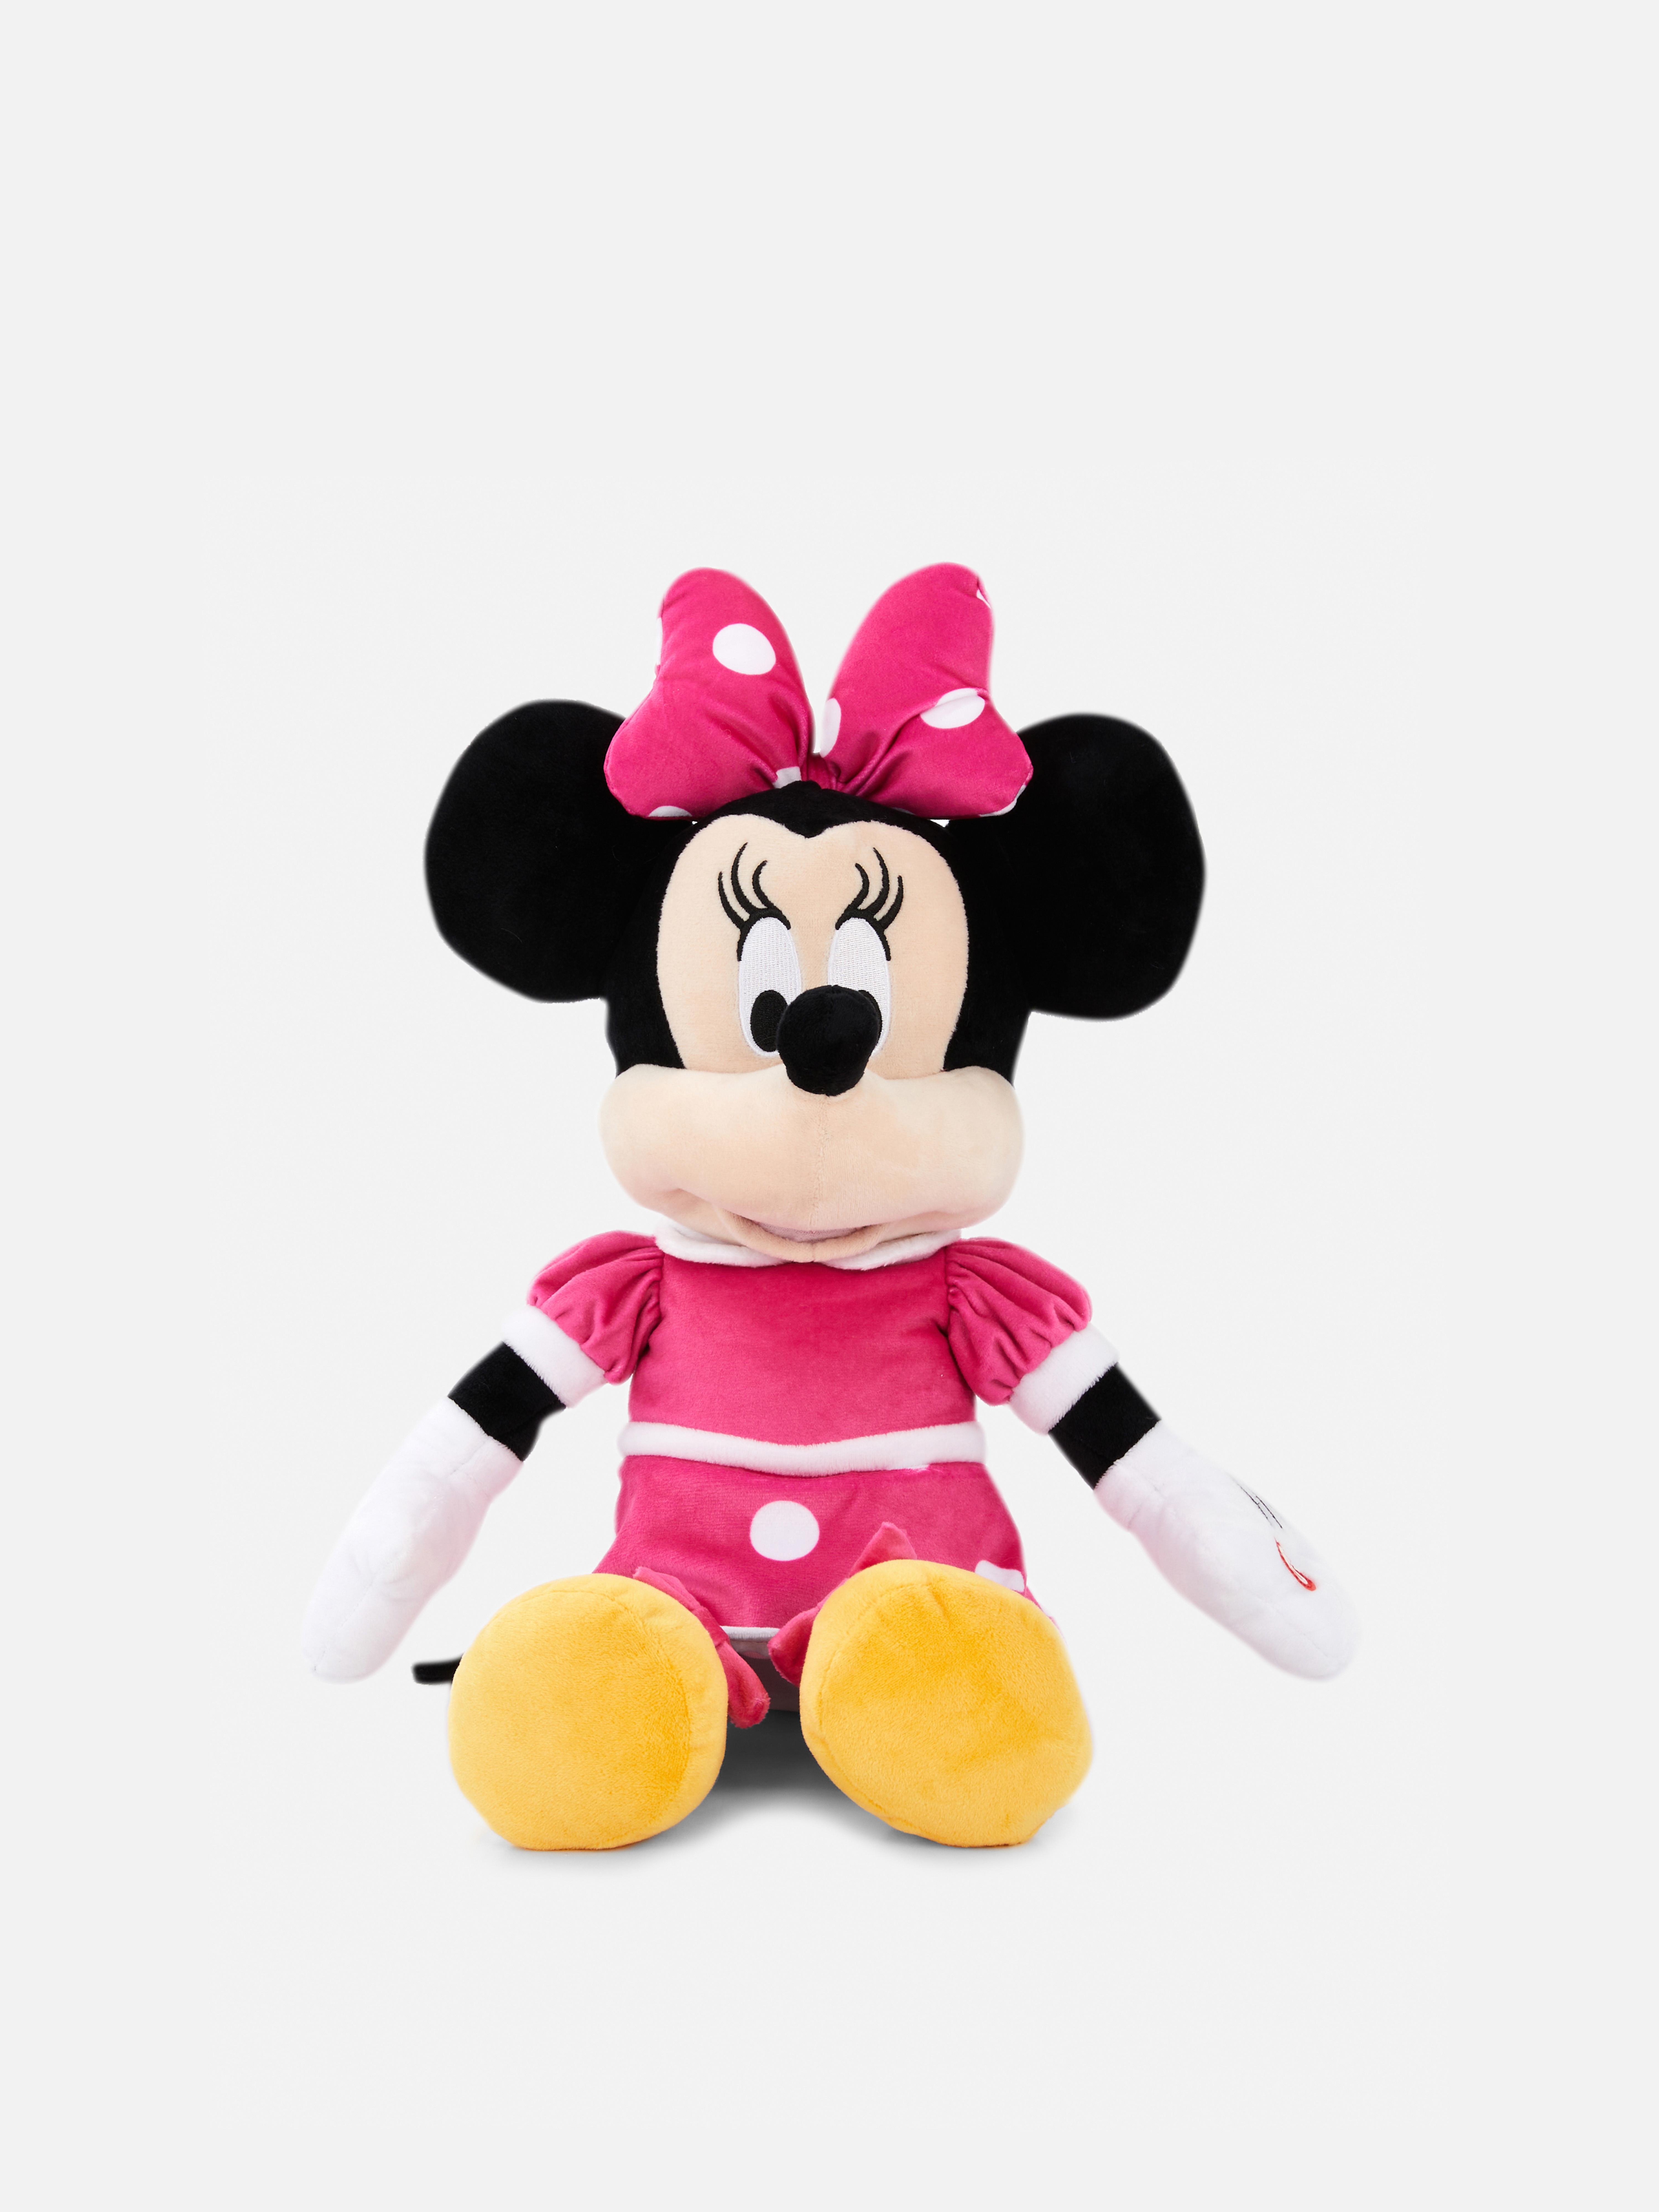 Peluche grande de Minnie Mouse de Disney